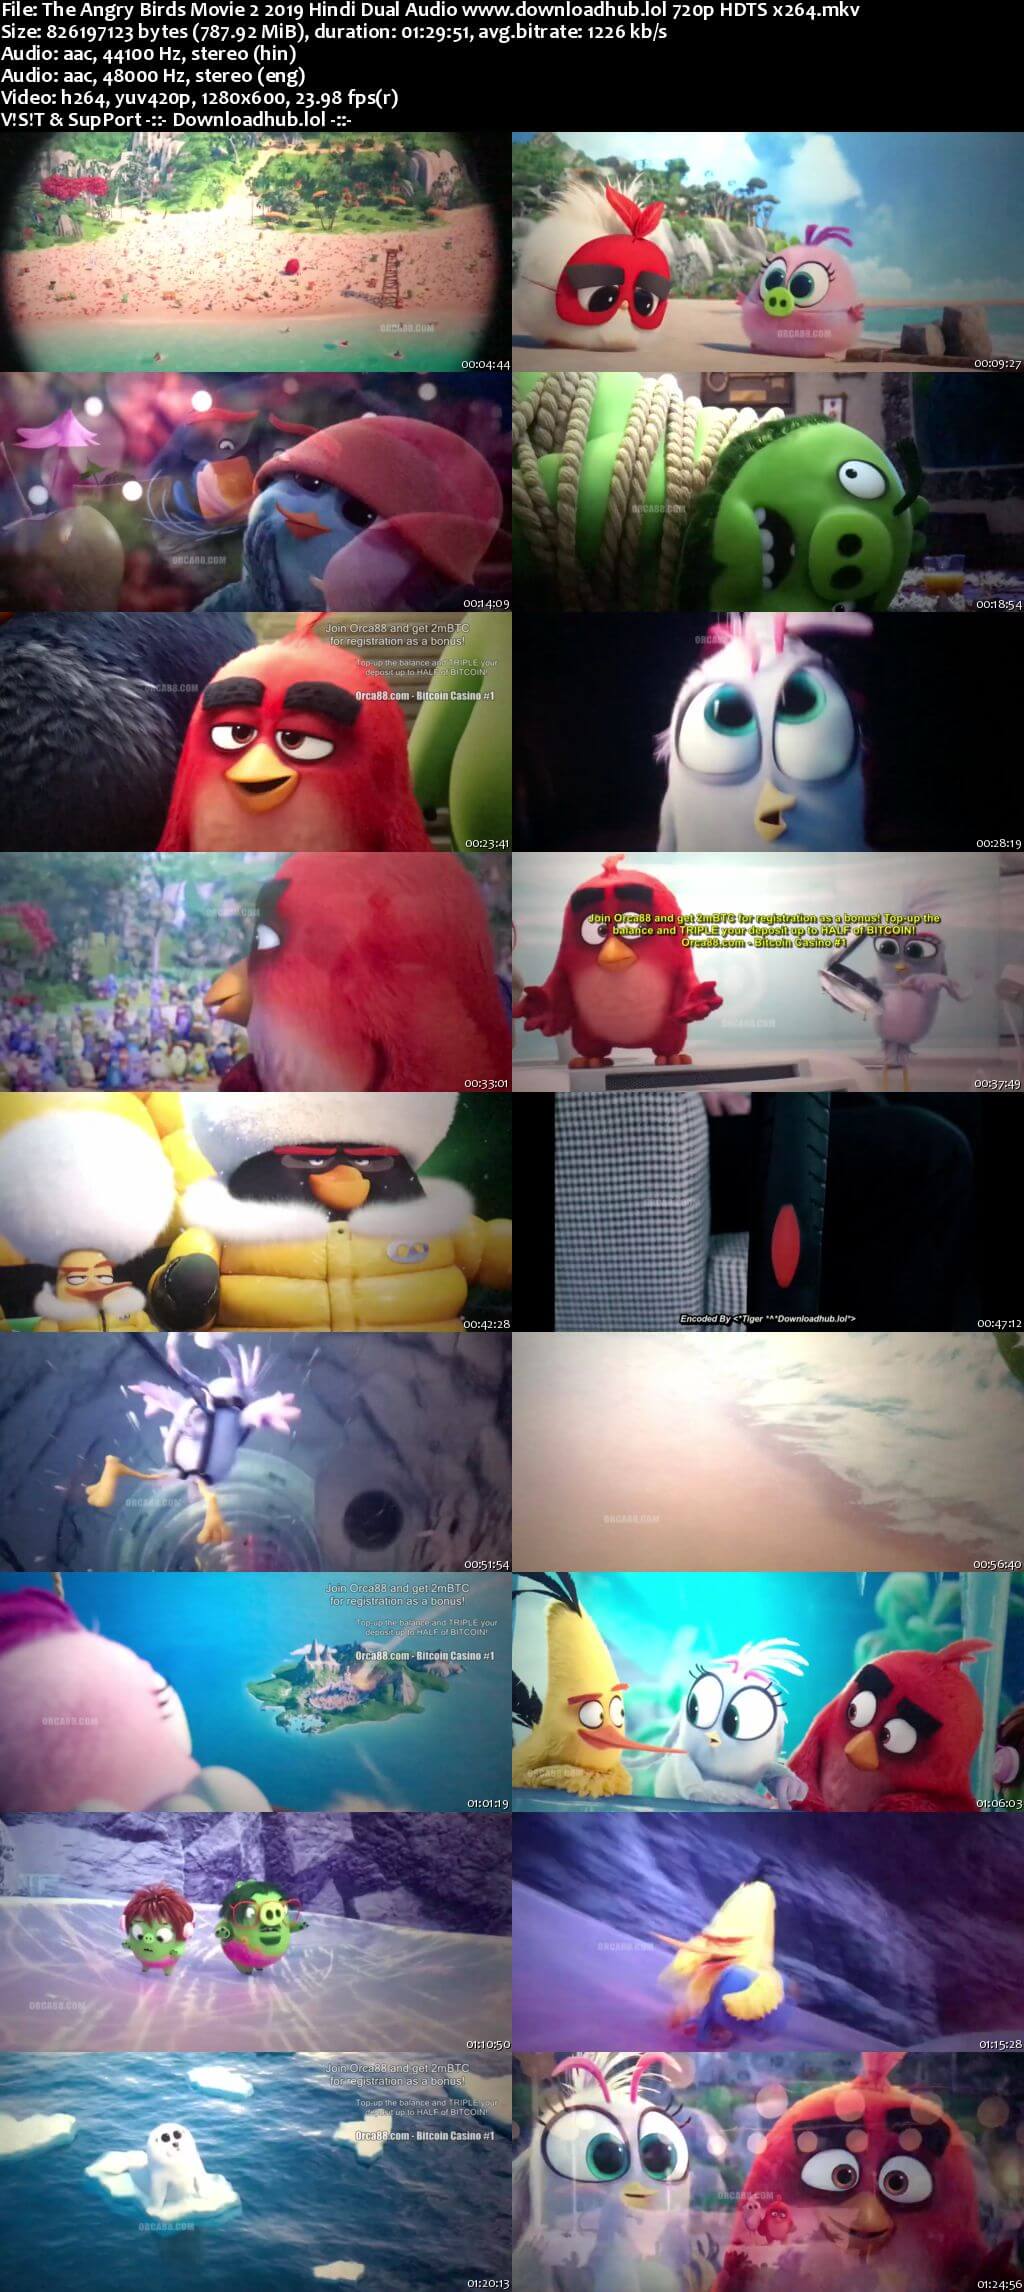 The Angry Birds Movie 2 2019 Hindi Dual Audio 720p HDTS x264